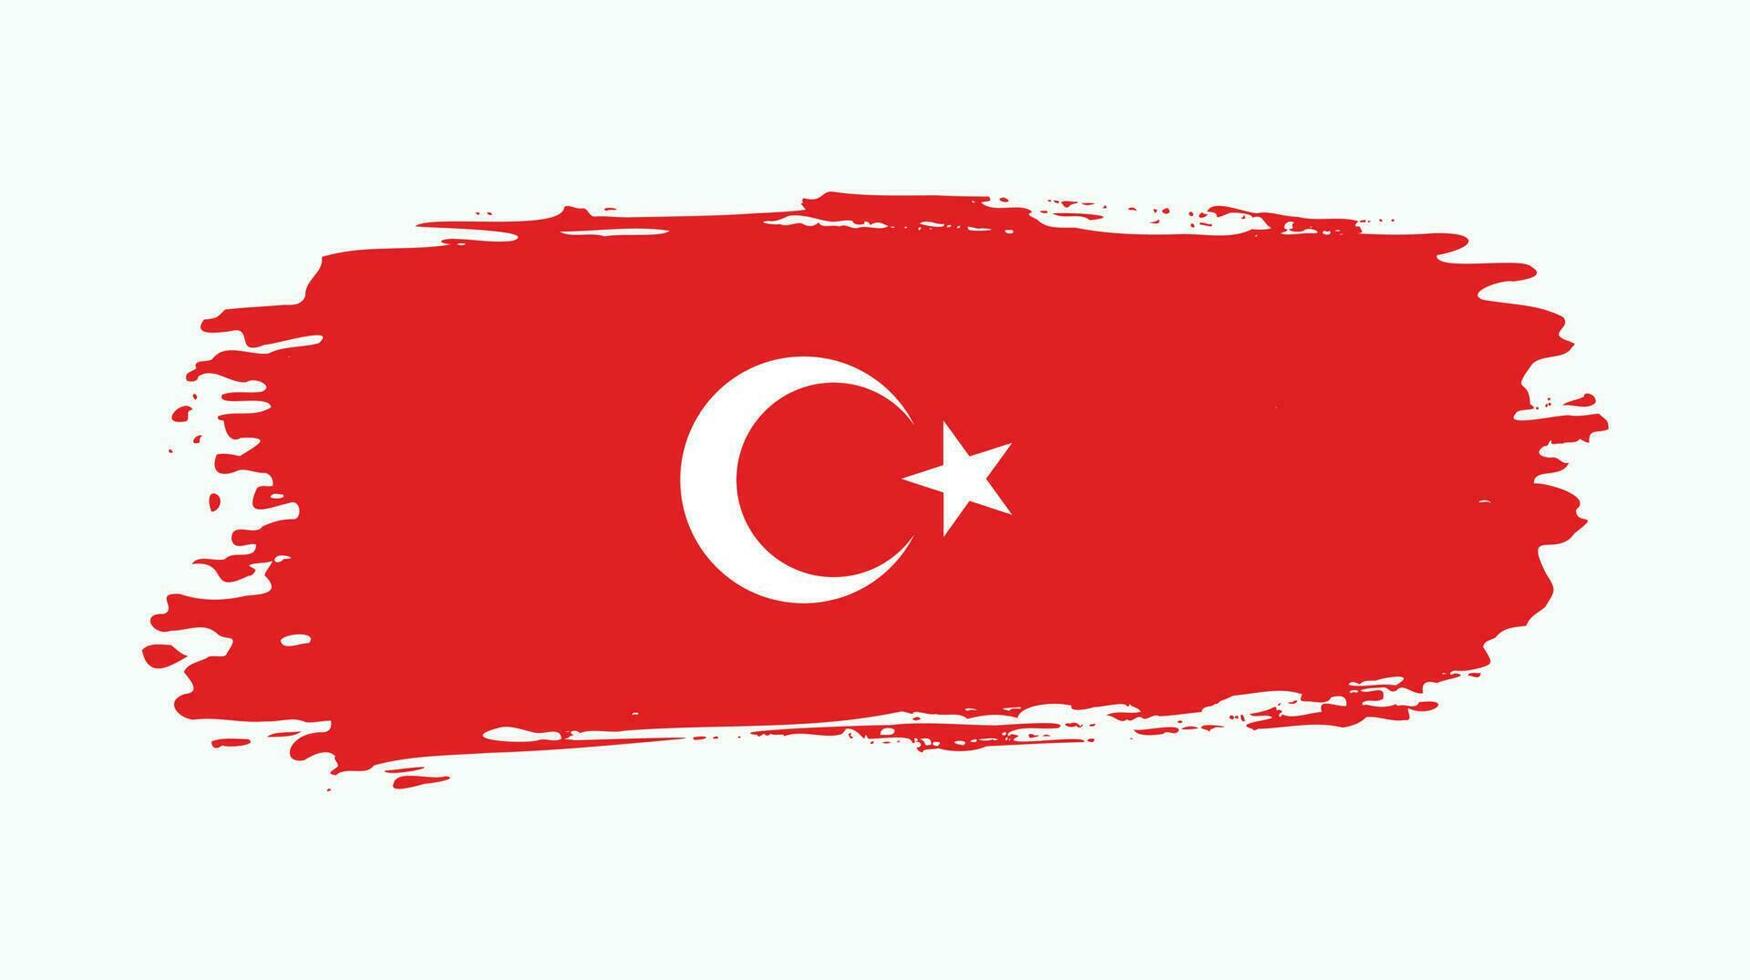 Faded Turkey grunge flag vector